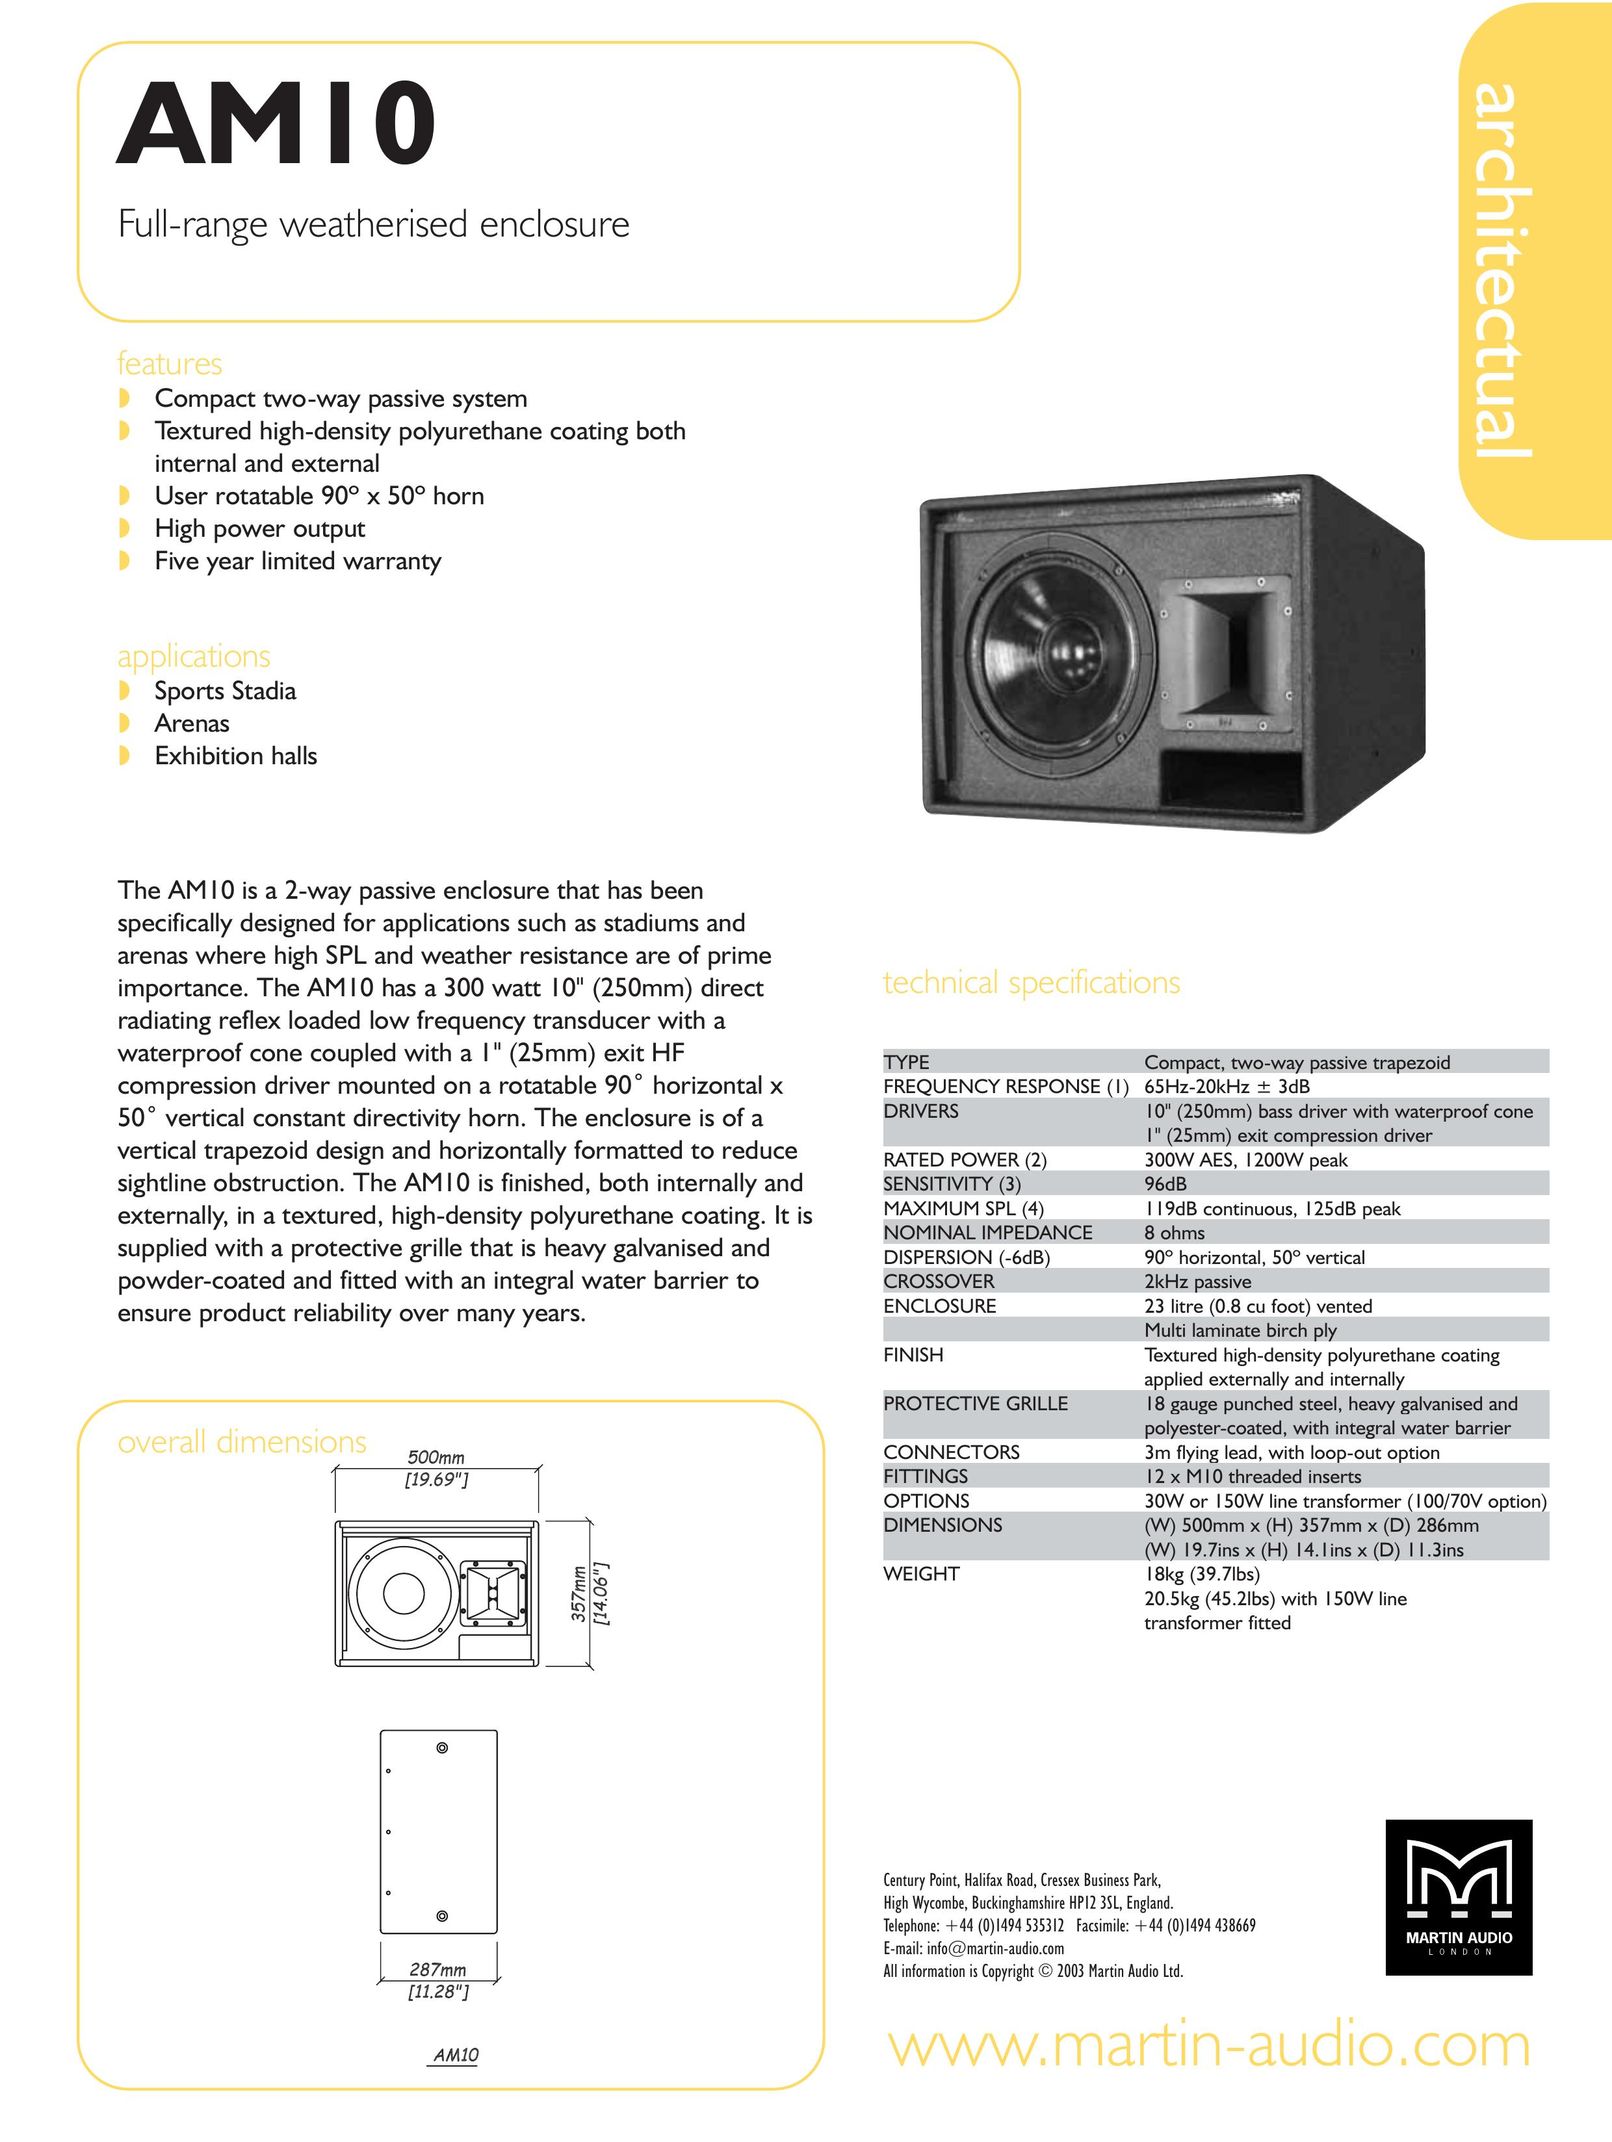 Martin Audio AM10 Speaker System User Manual